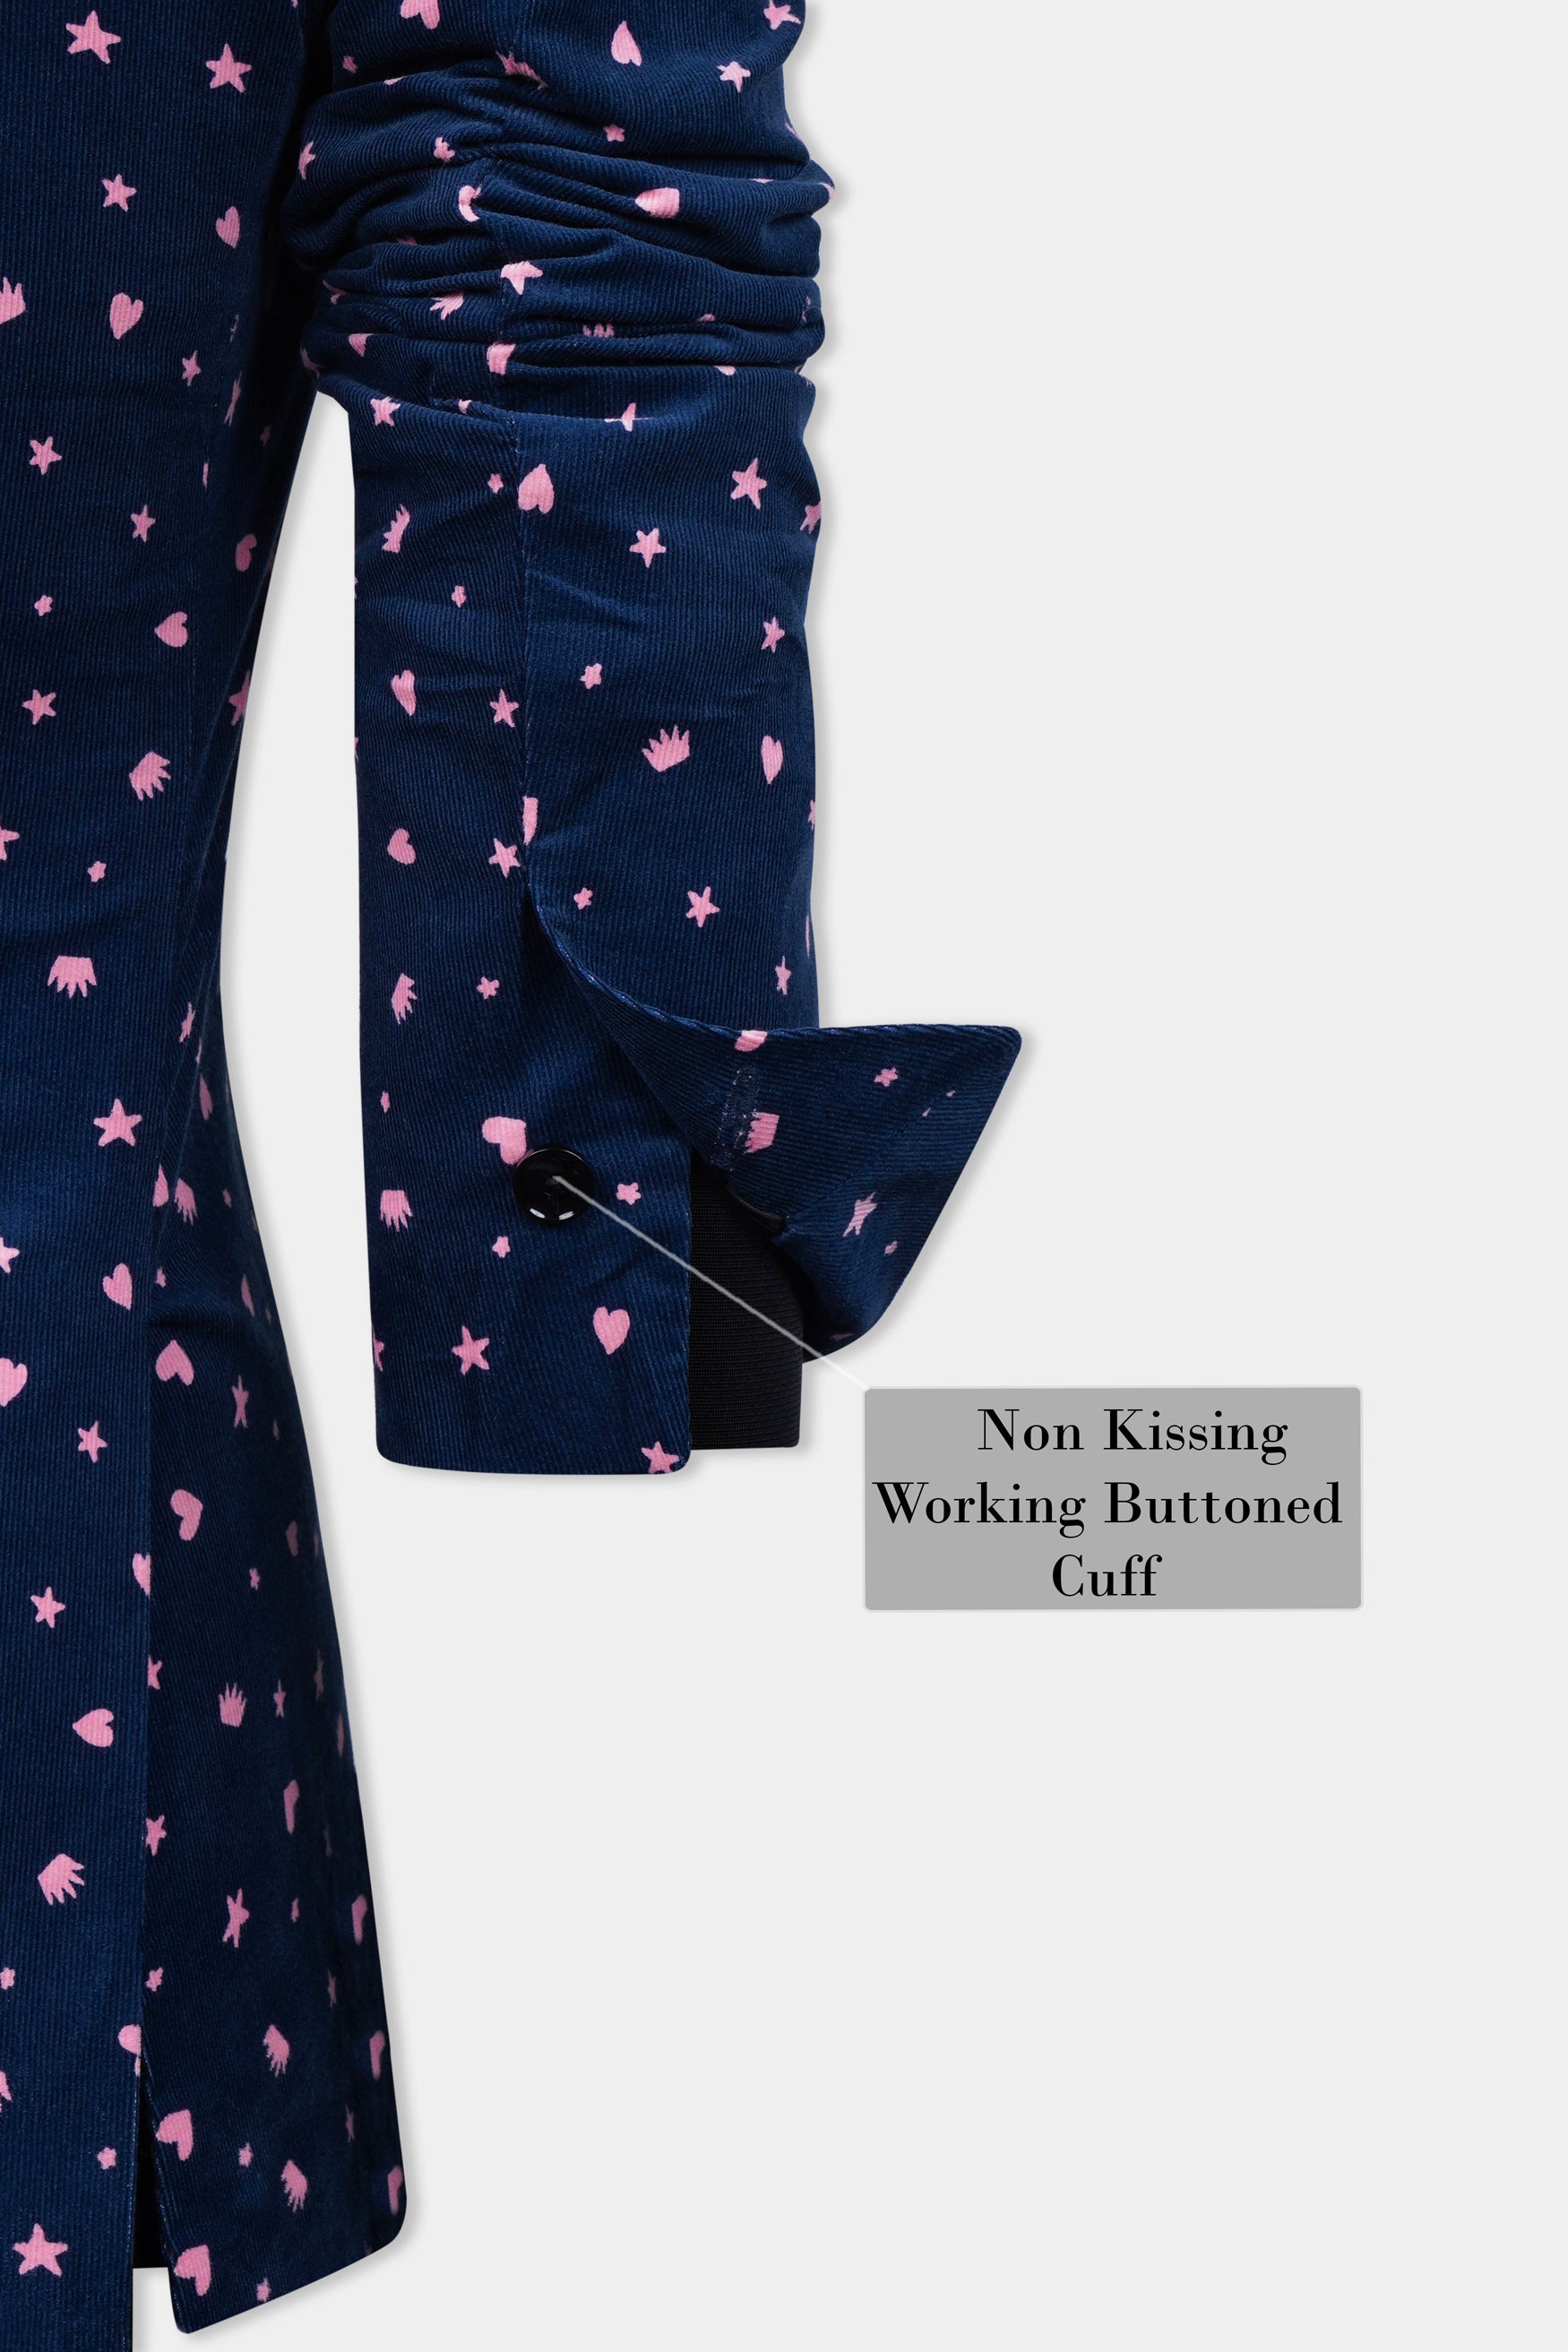 Downriver Blue and Cavern Pink Shapes Printed Premium Cotton Women’s Tuxedo Blazer